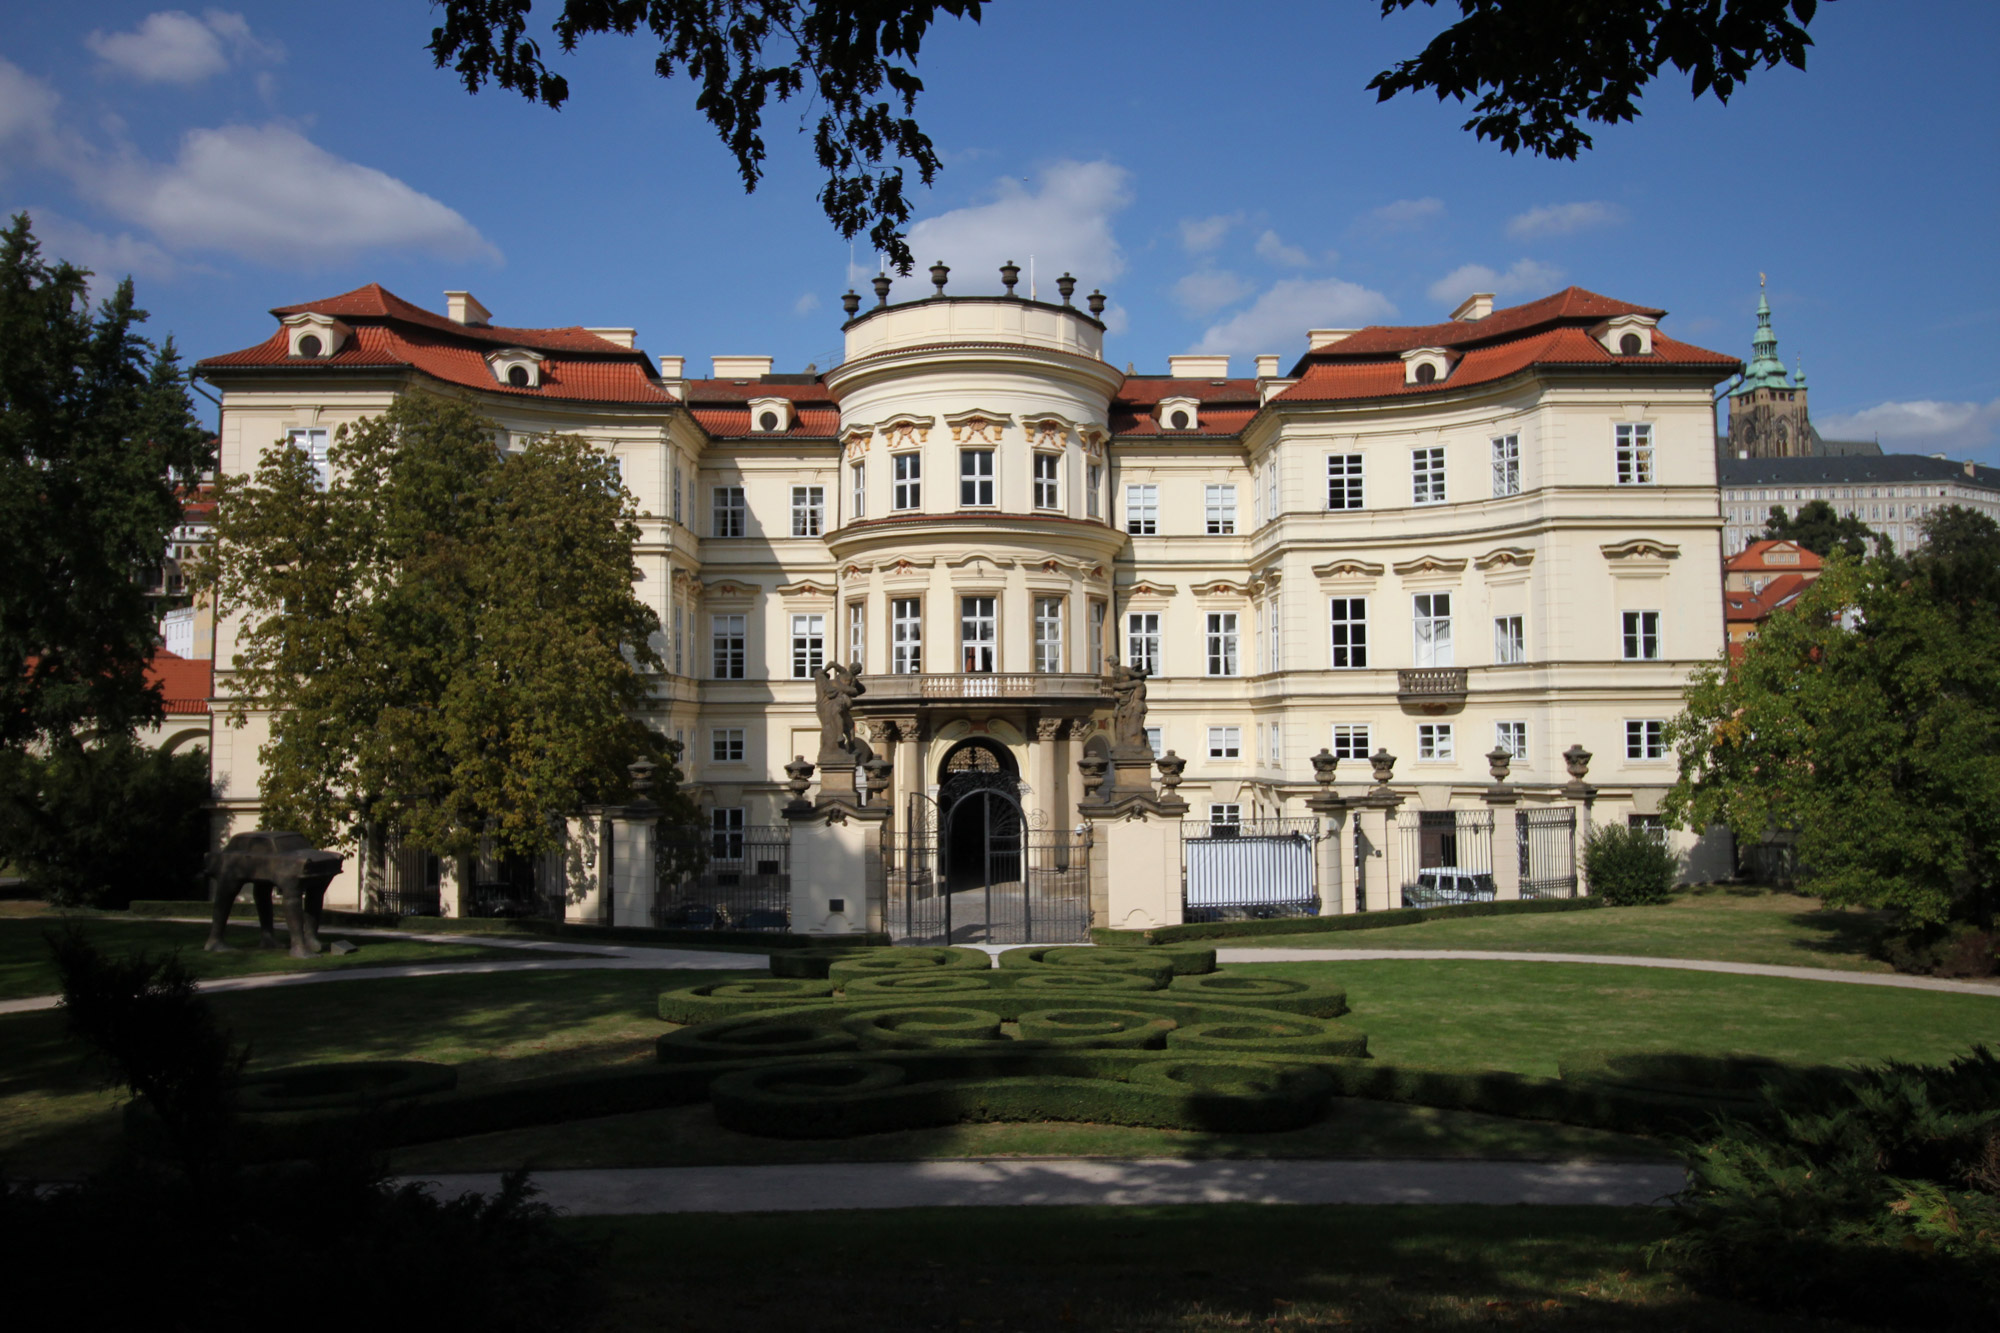 Bierpersreis Tsjechië - Praag - Duitse ambassade